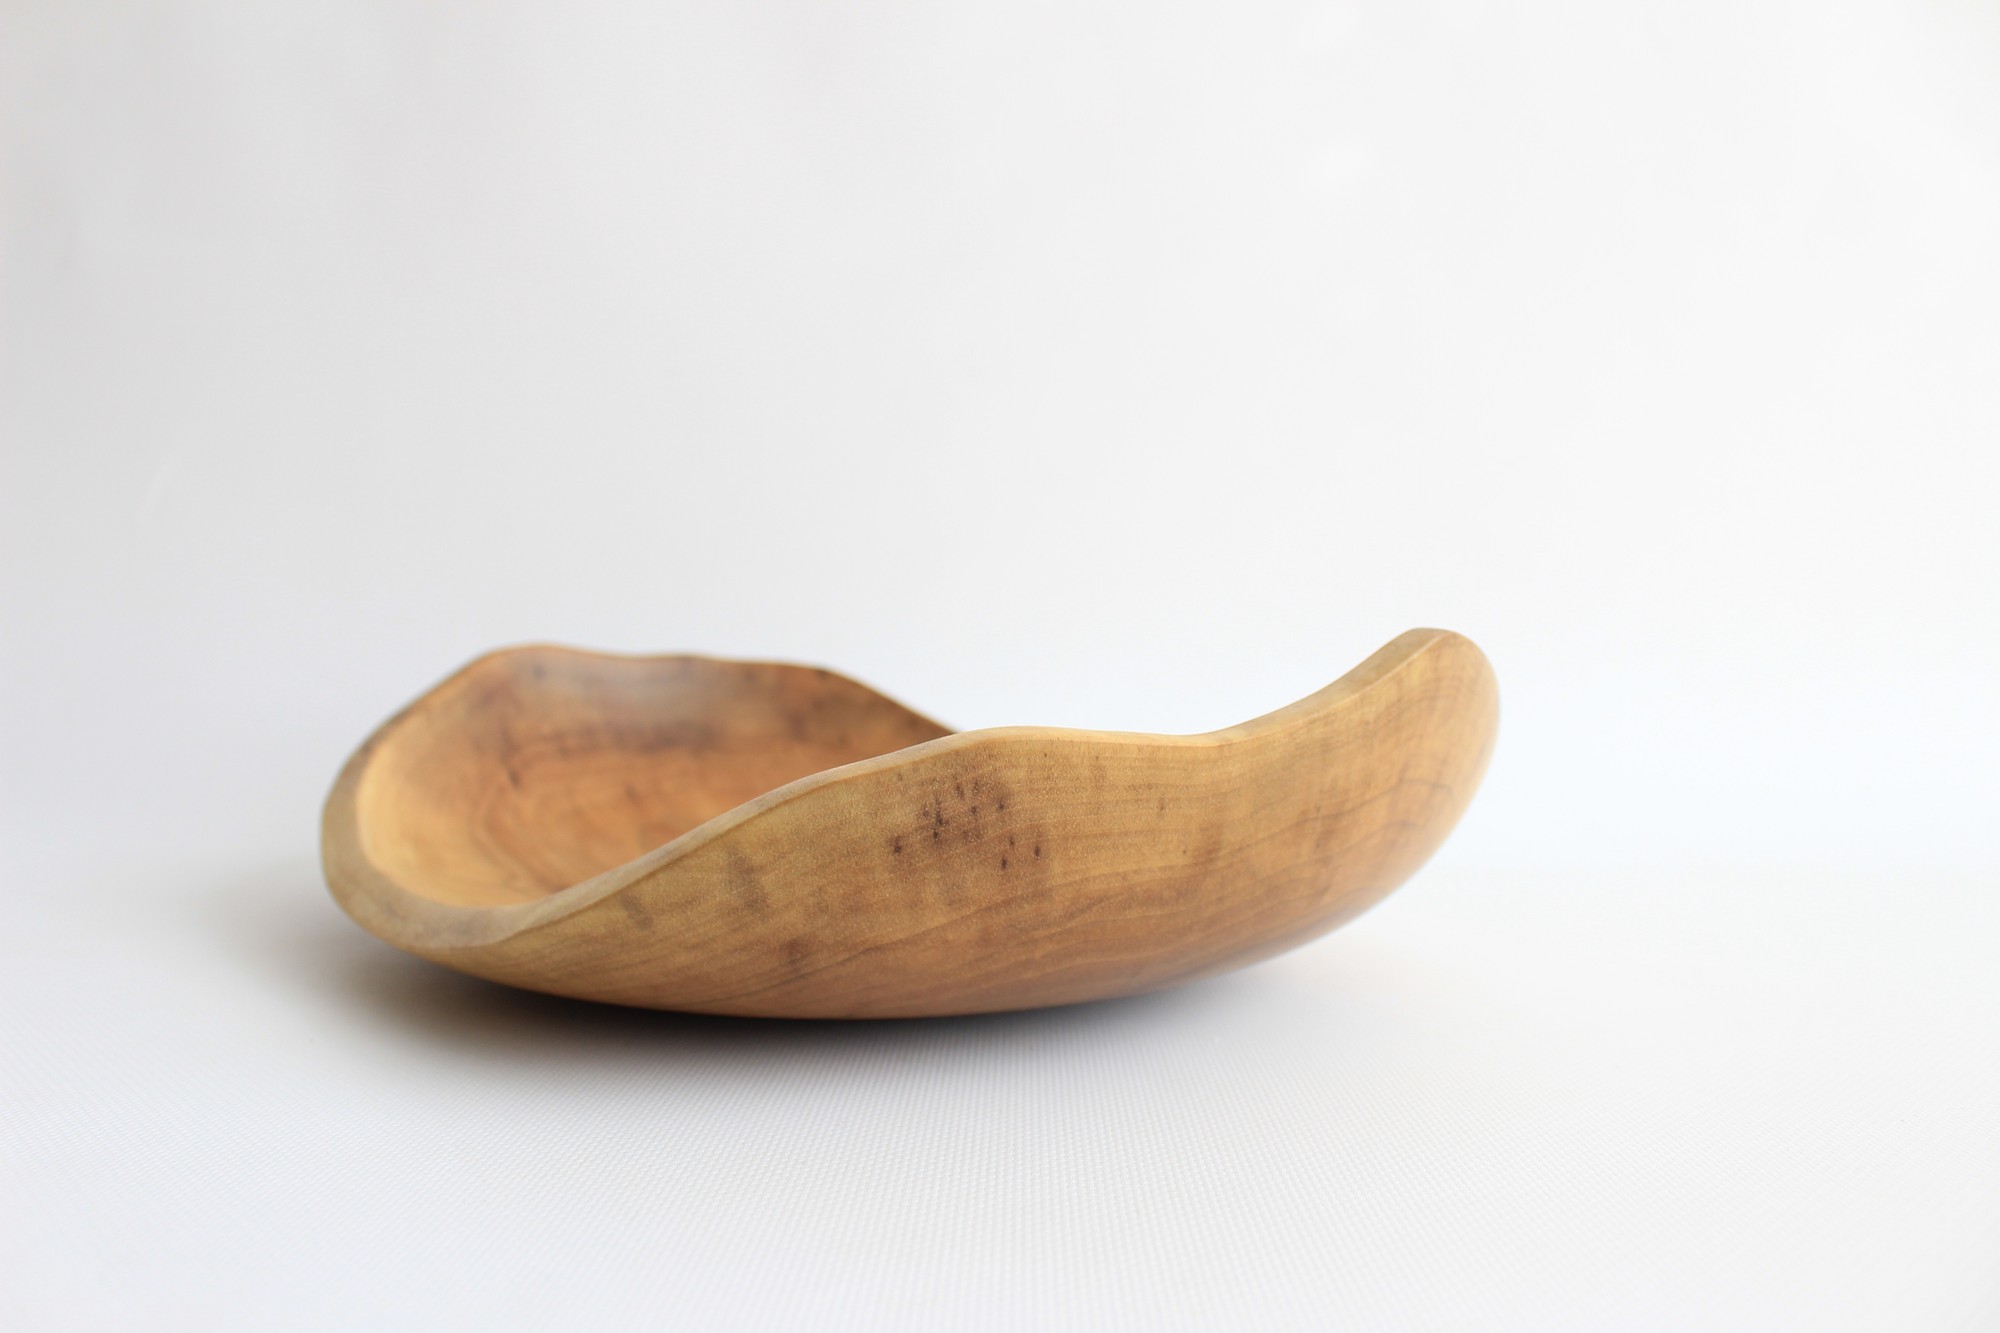 Handmade fruit bowl, serving dinnerware, wooden decorative plate, rustic centerpiece bowl